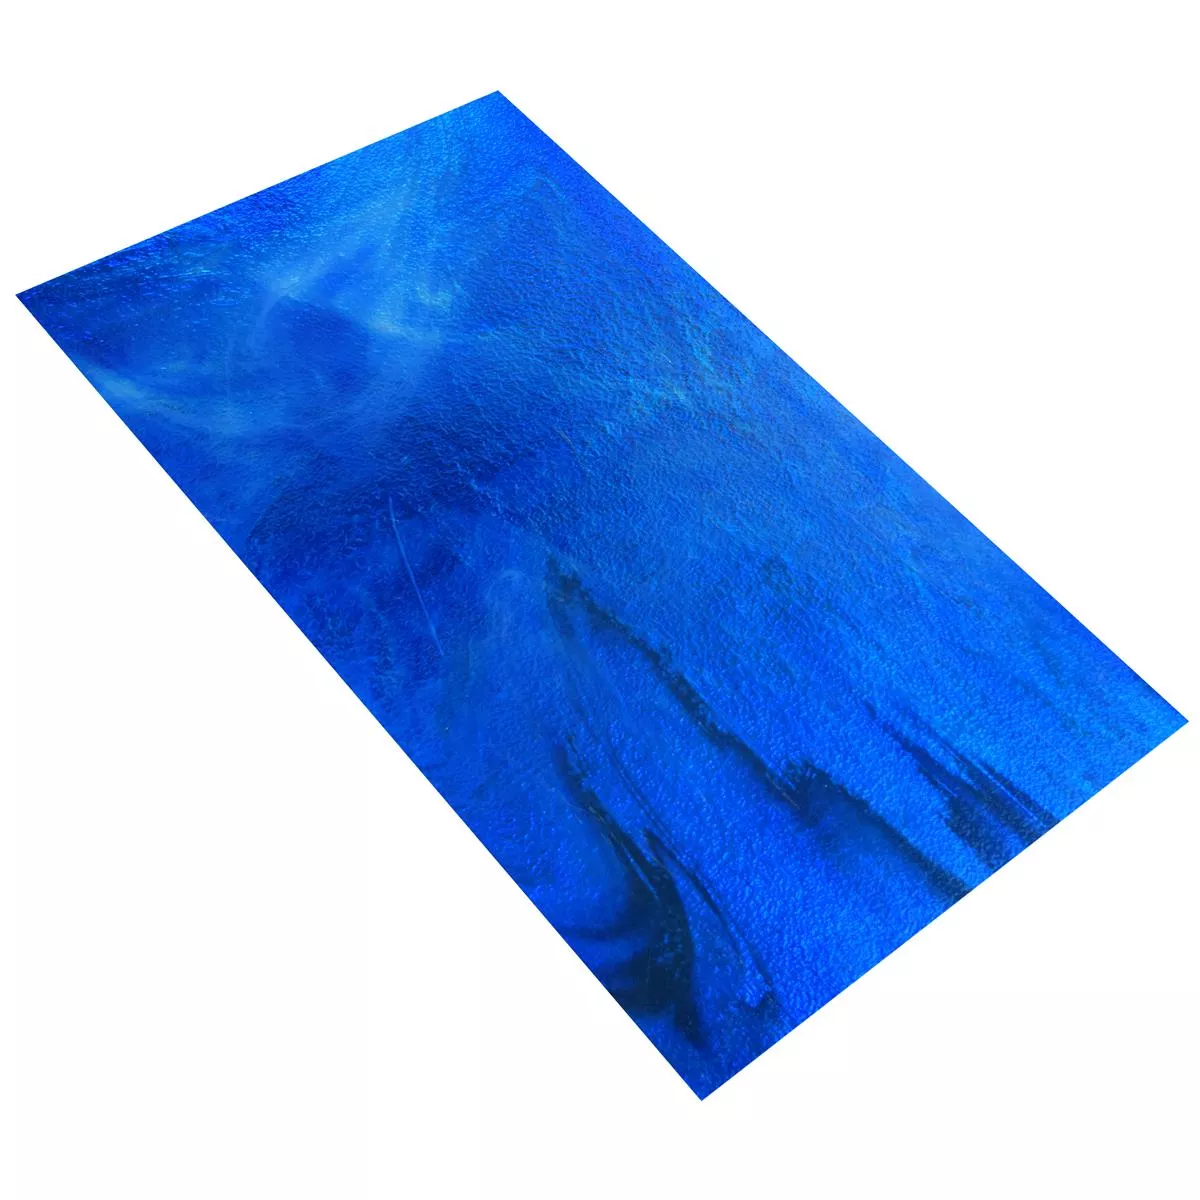 Staklo Zidne Pločice Trend-Vi Supreme Maritime Blue 30x60cm